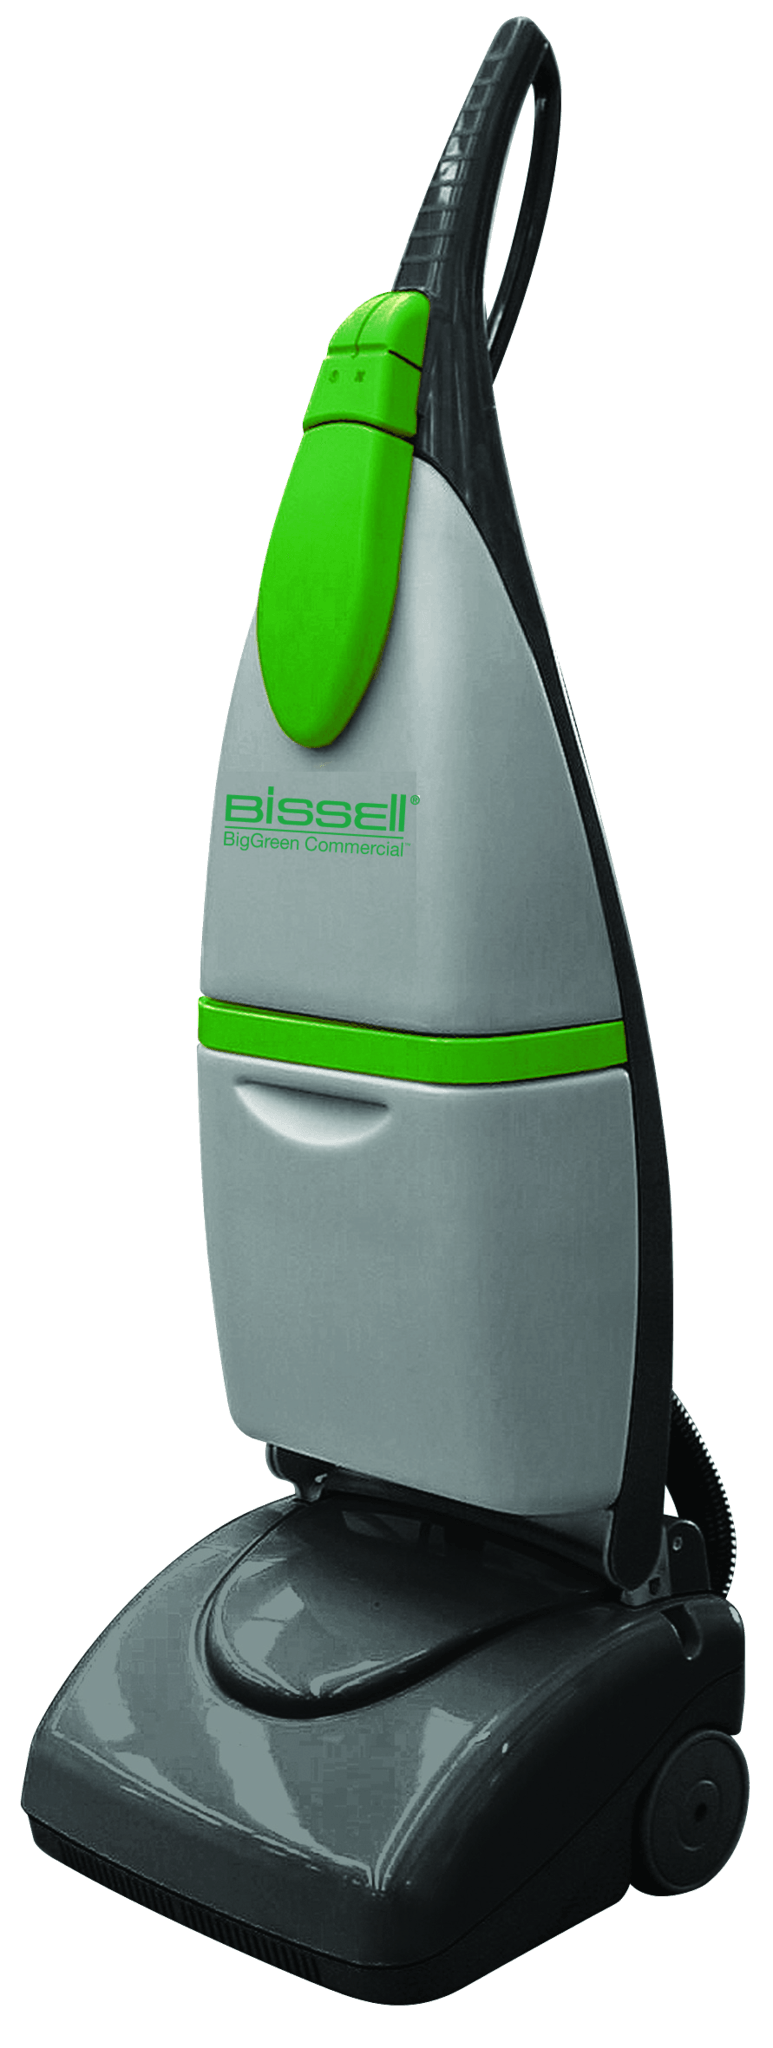 BISSELL® BGUS1000 BigGreen Commercial Auto Scrubber